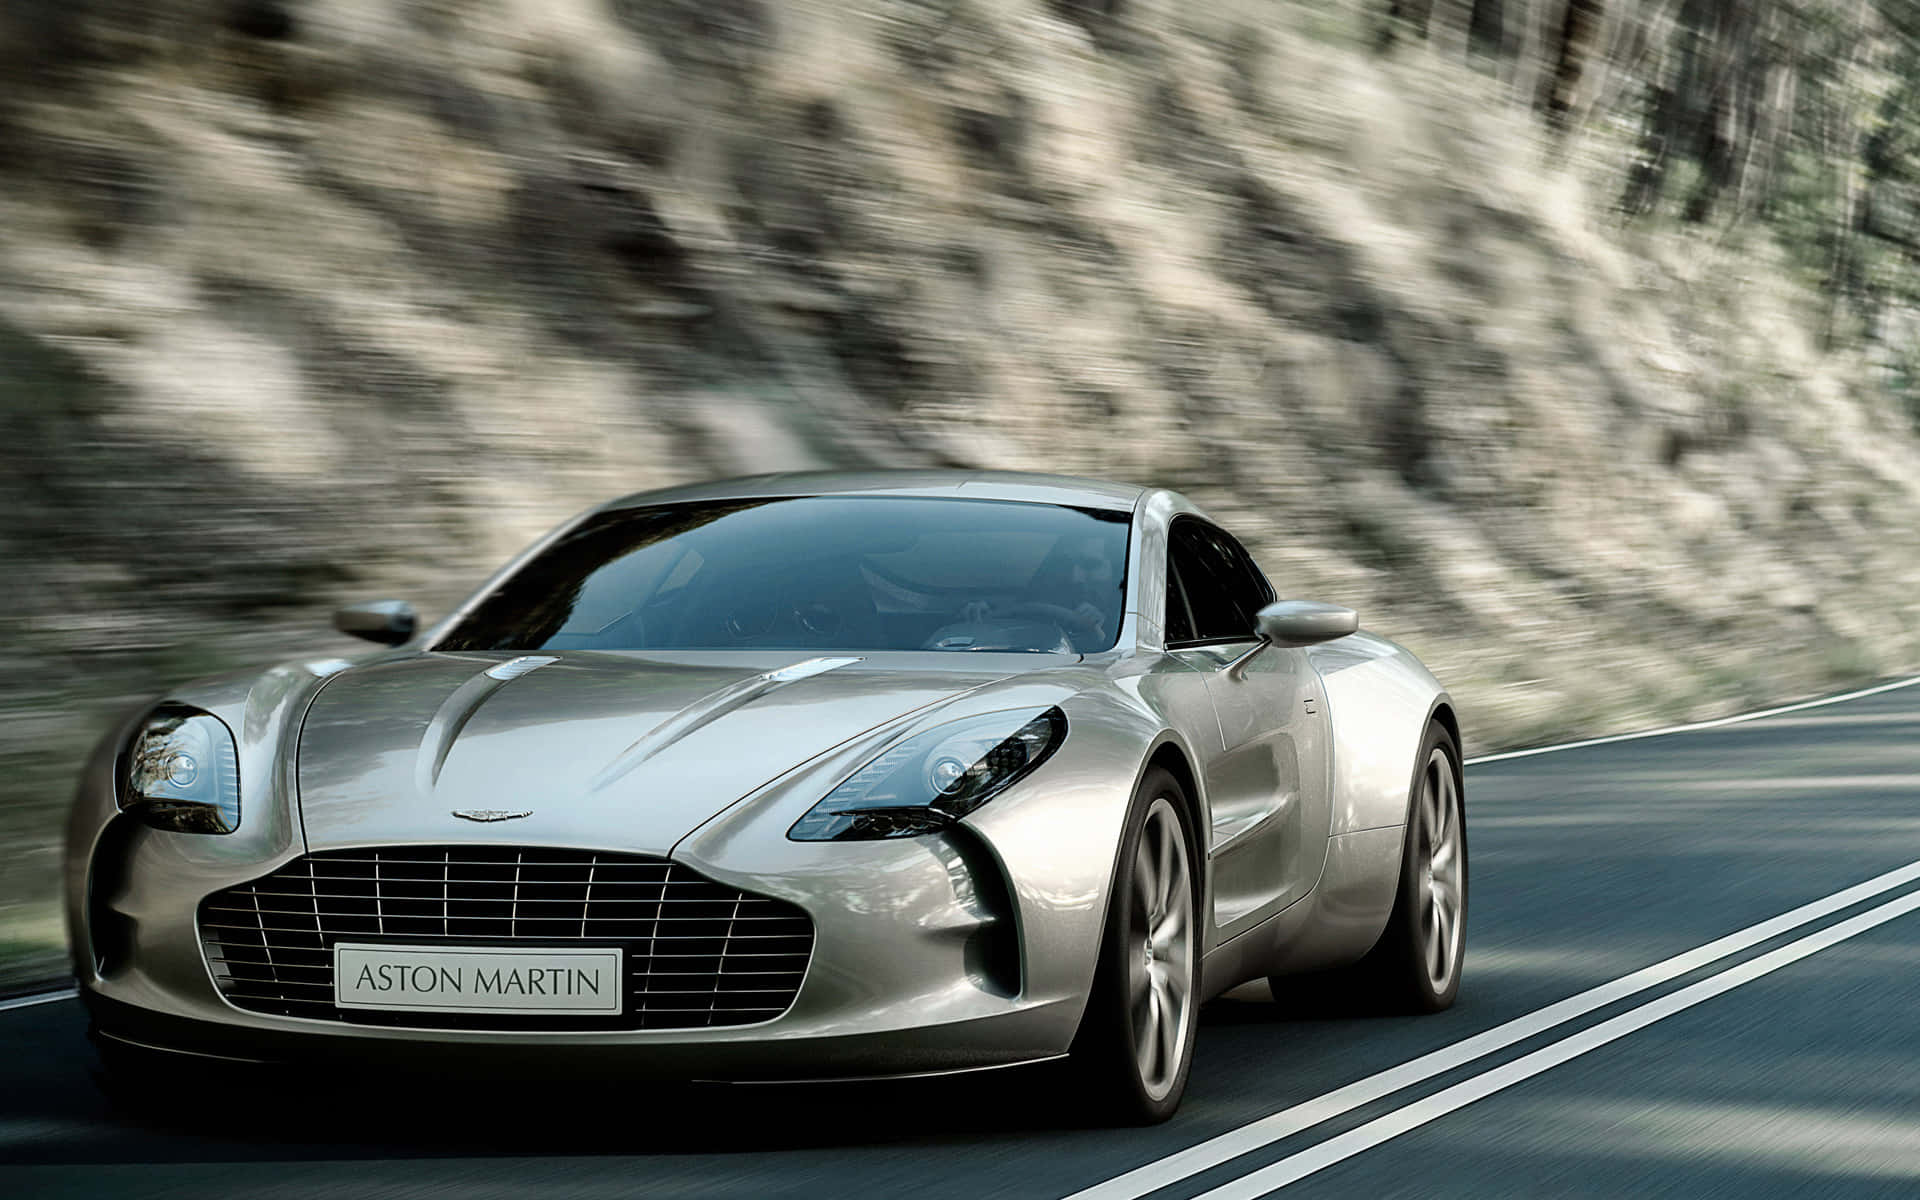 Aston Martin: The Iconic Sports Car